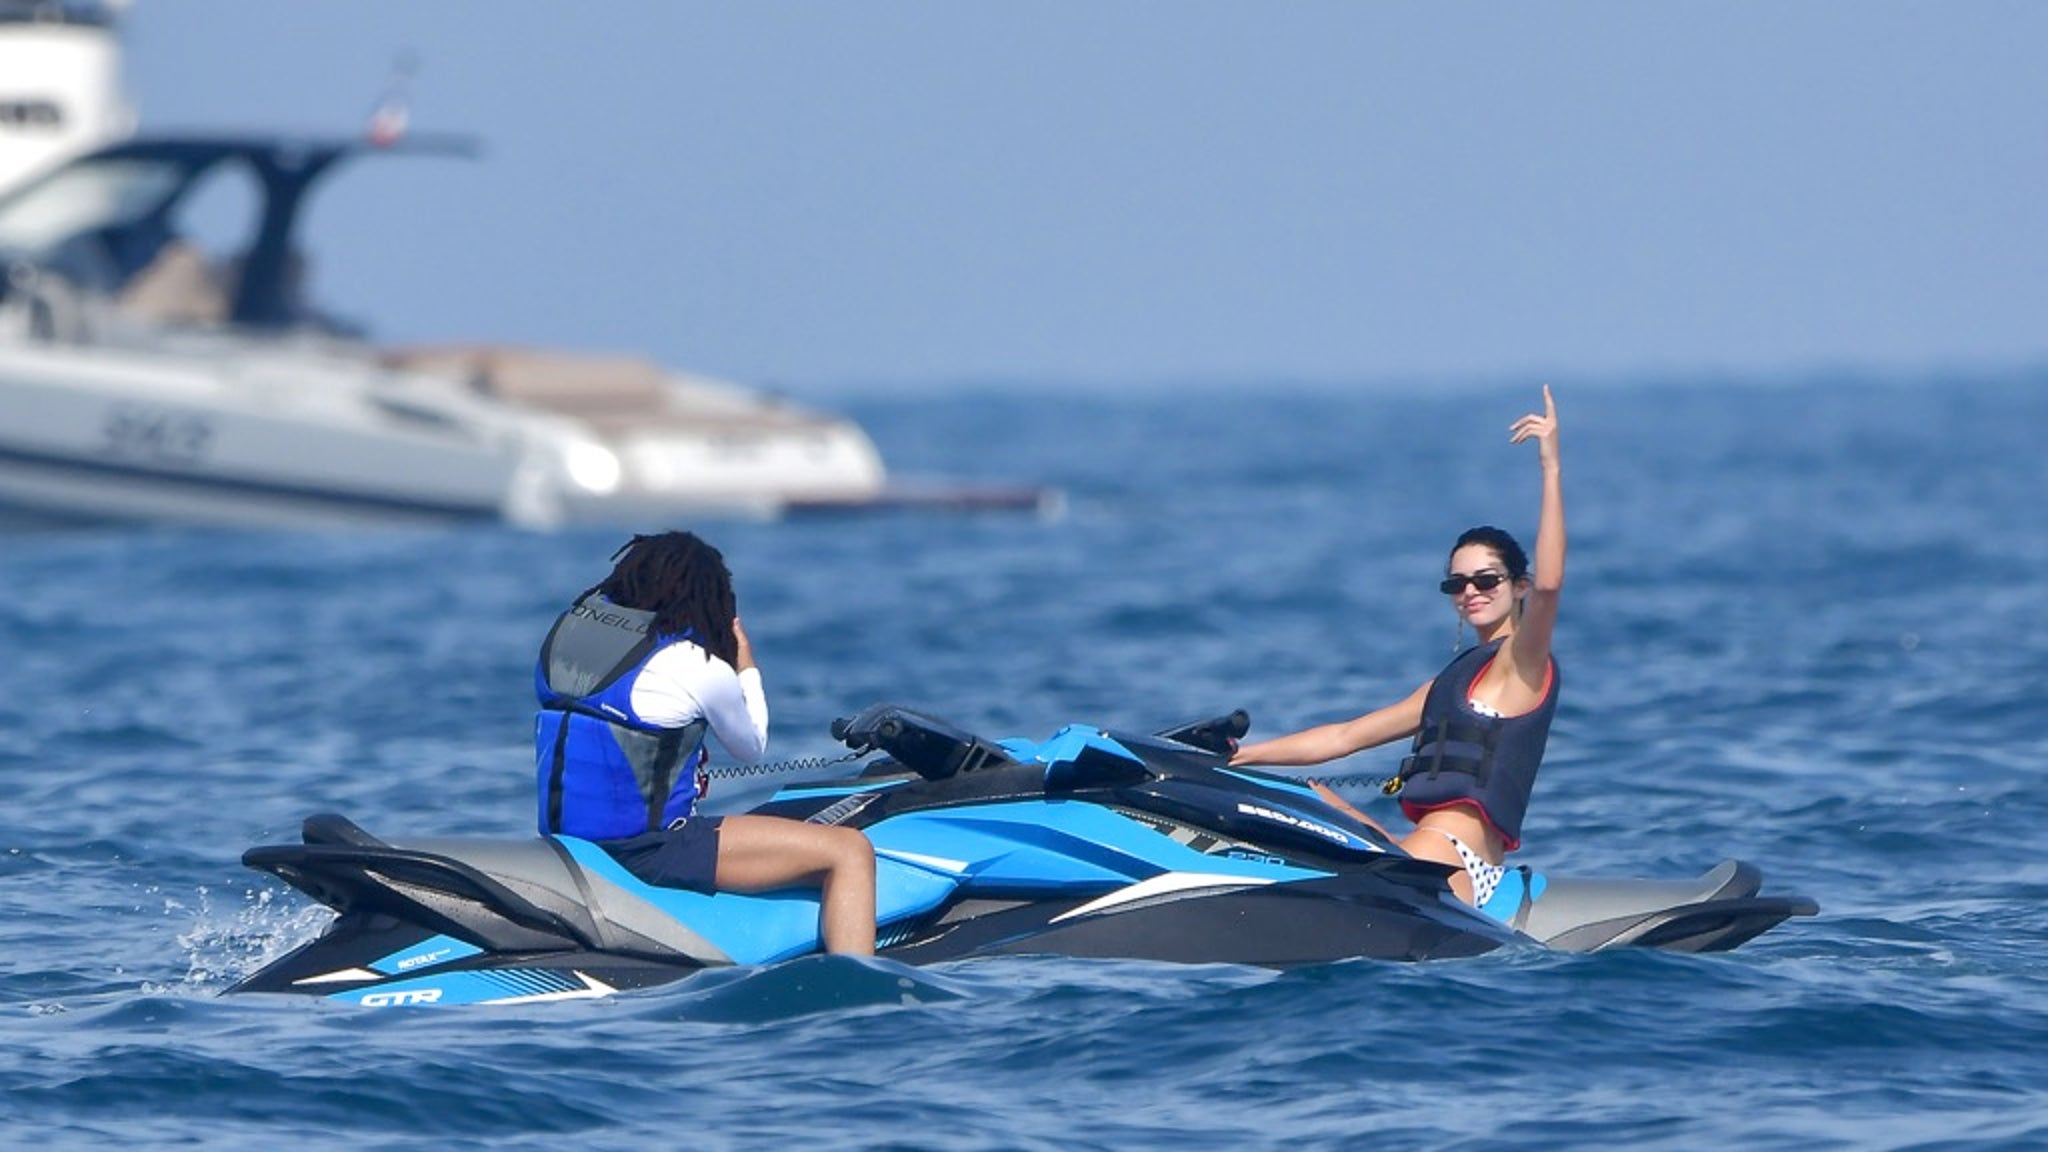 Kendall Jenner Jetskis In Monaco 